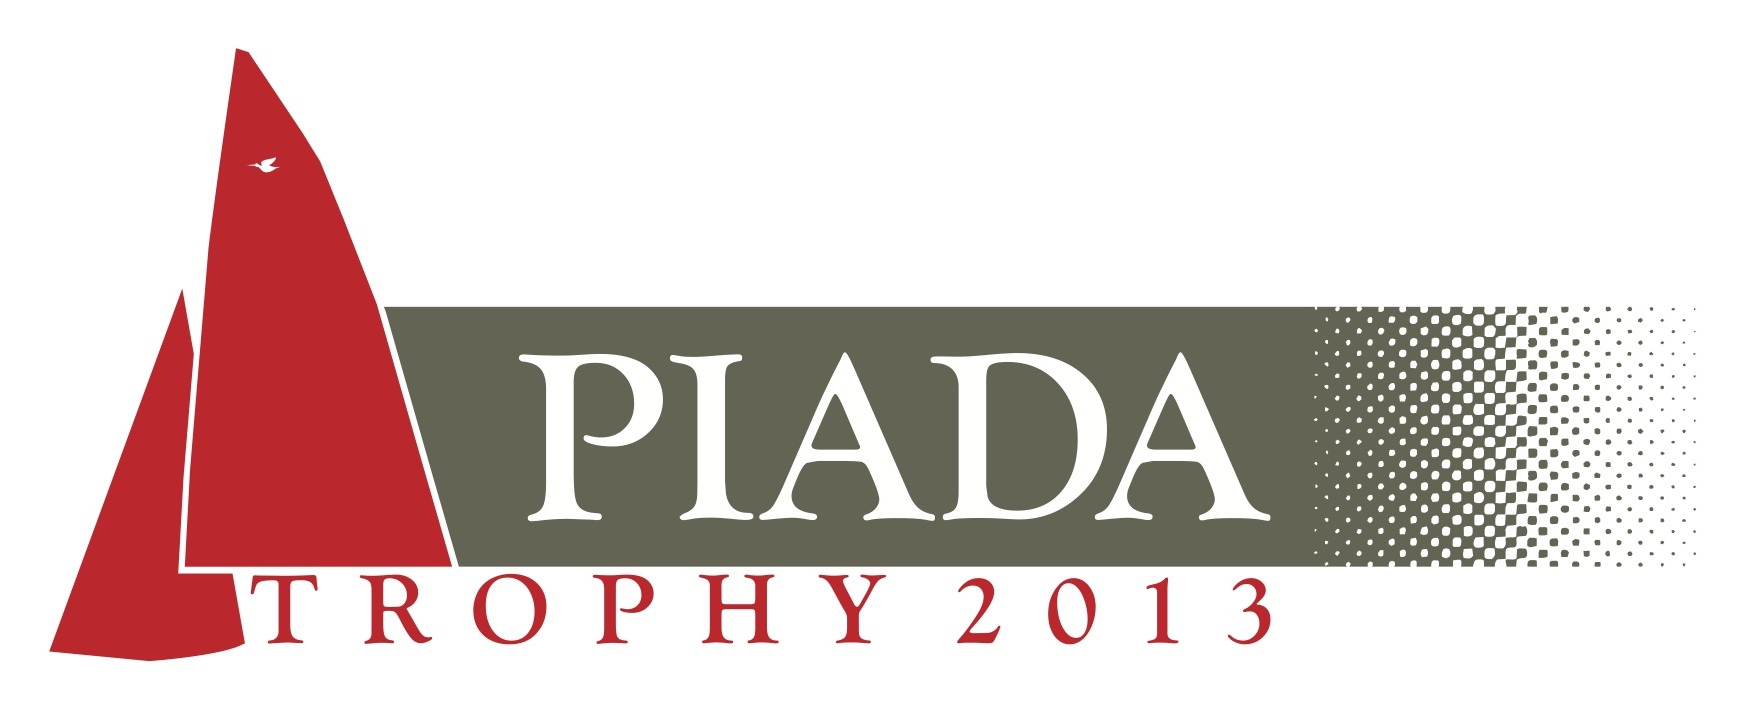 Piada Trophy Image